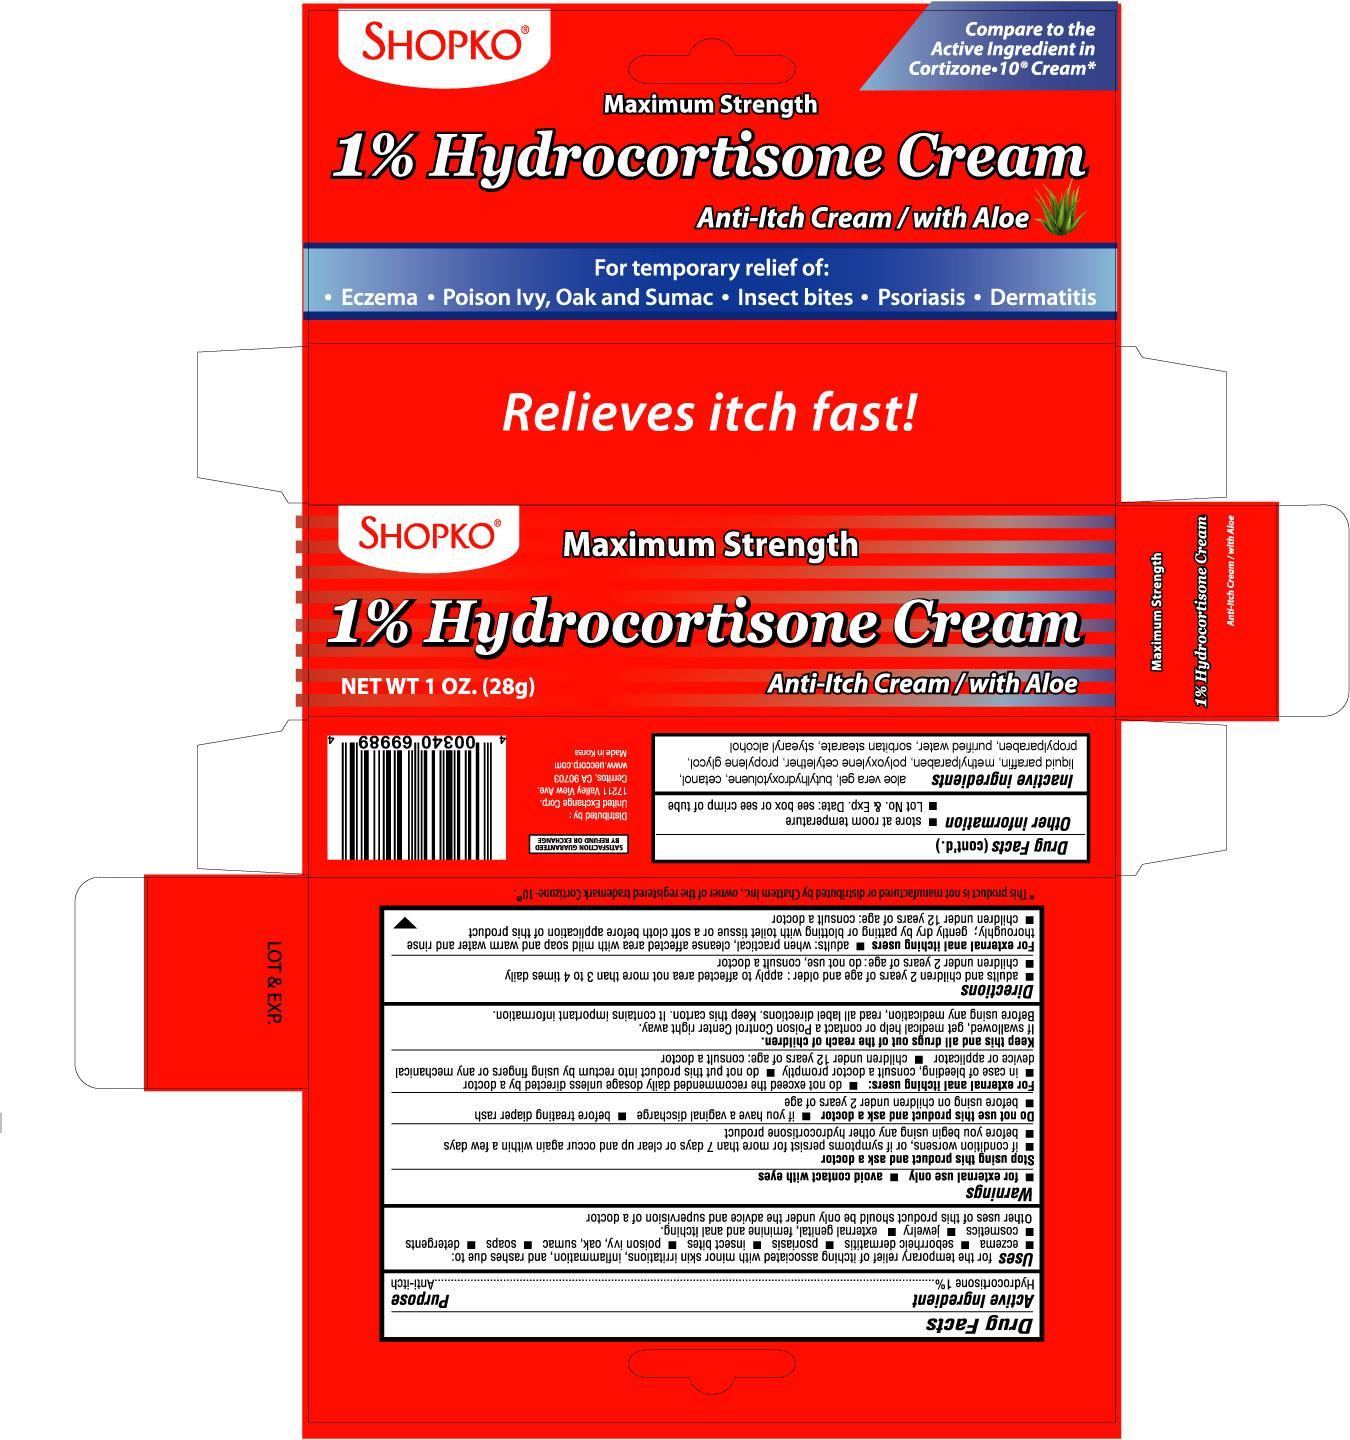 Shopko Hydrocortisone With Aloe | Hydrocortisone Cream while Breastfeeding